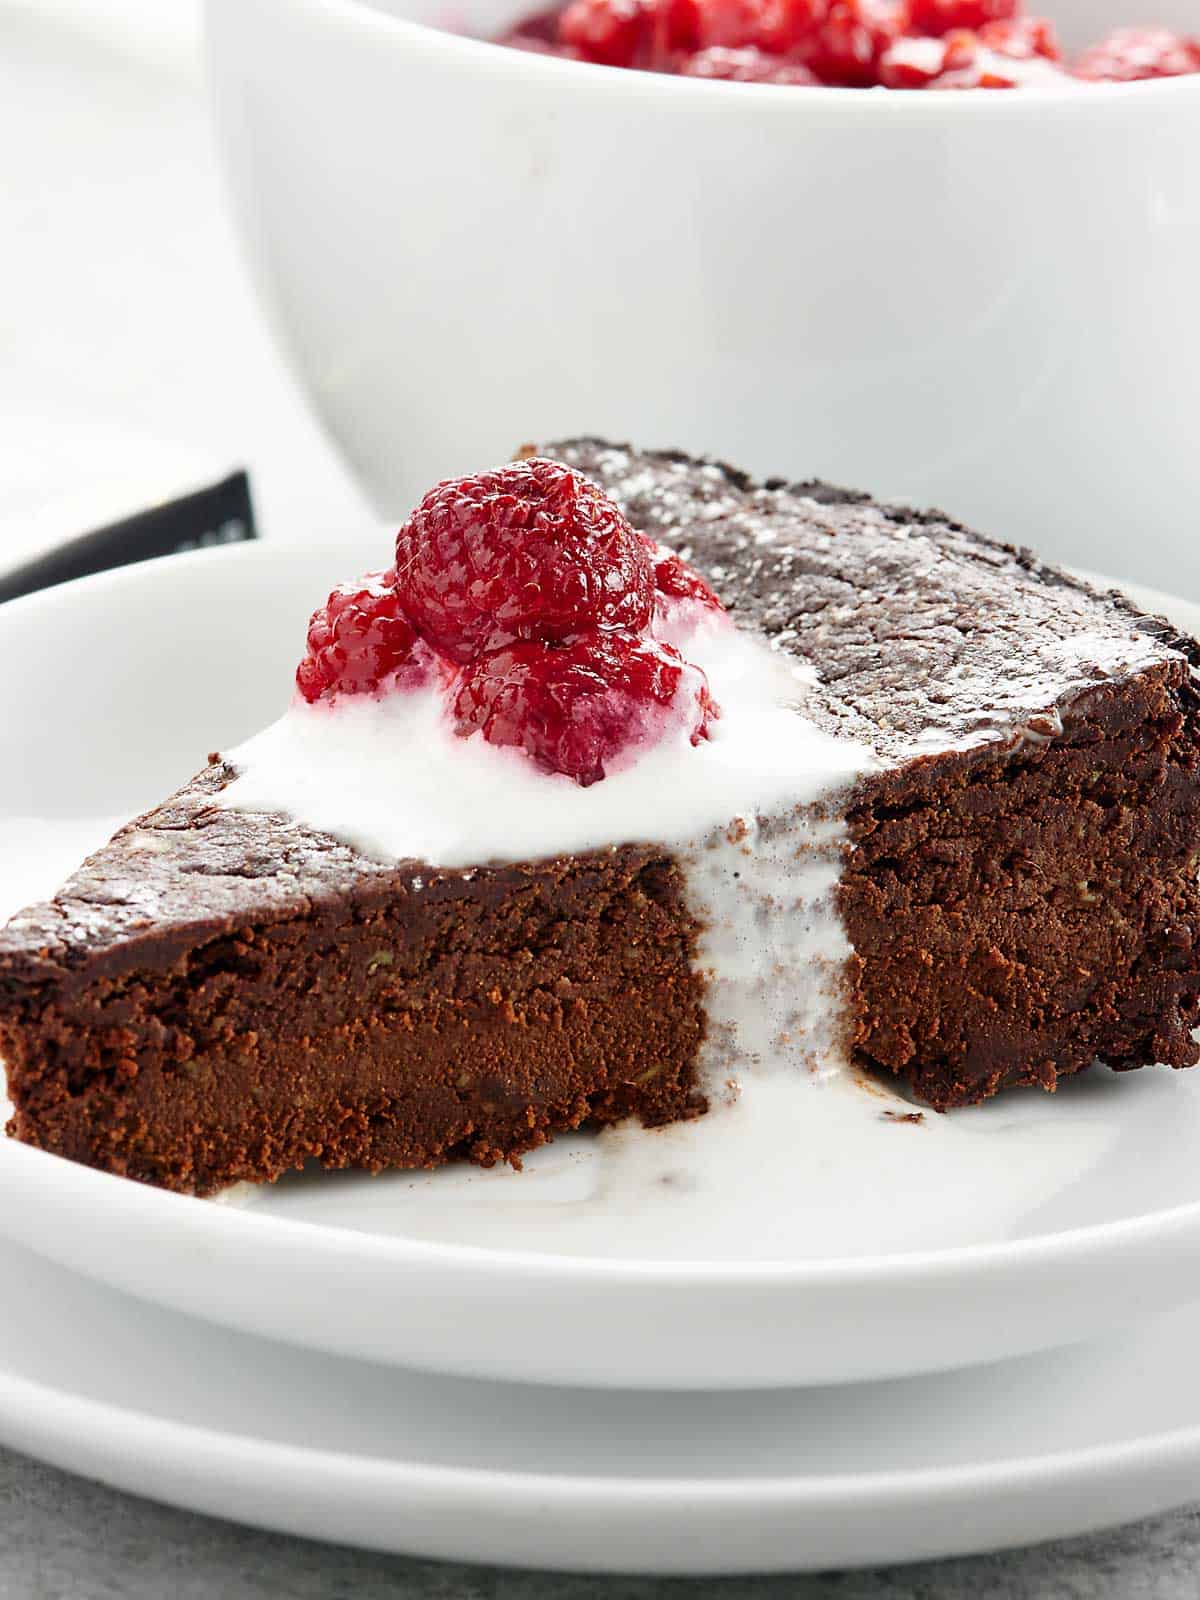 Vegan Flourless Chocolate Cake Recipe - Easy, Gluten Free